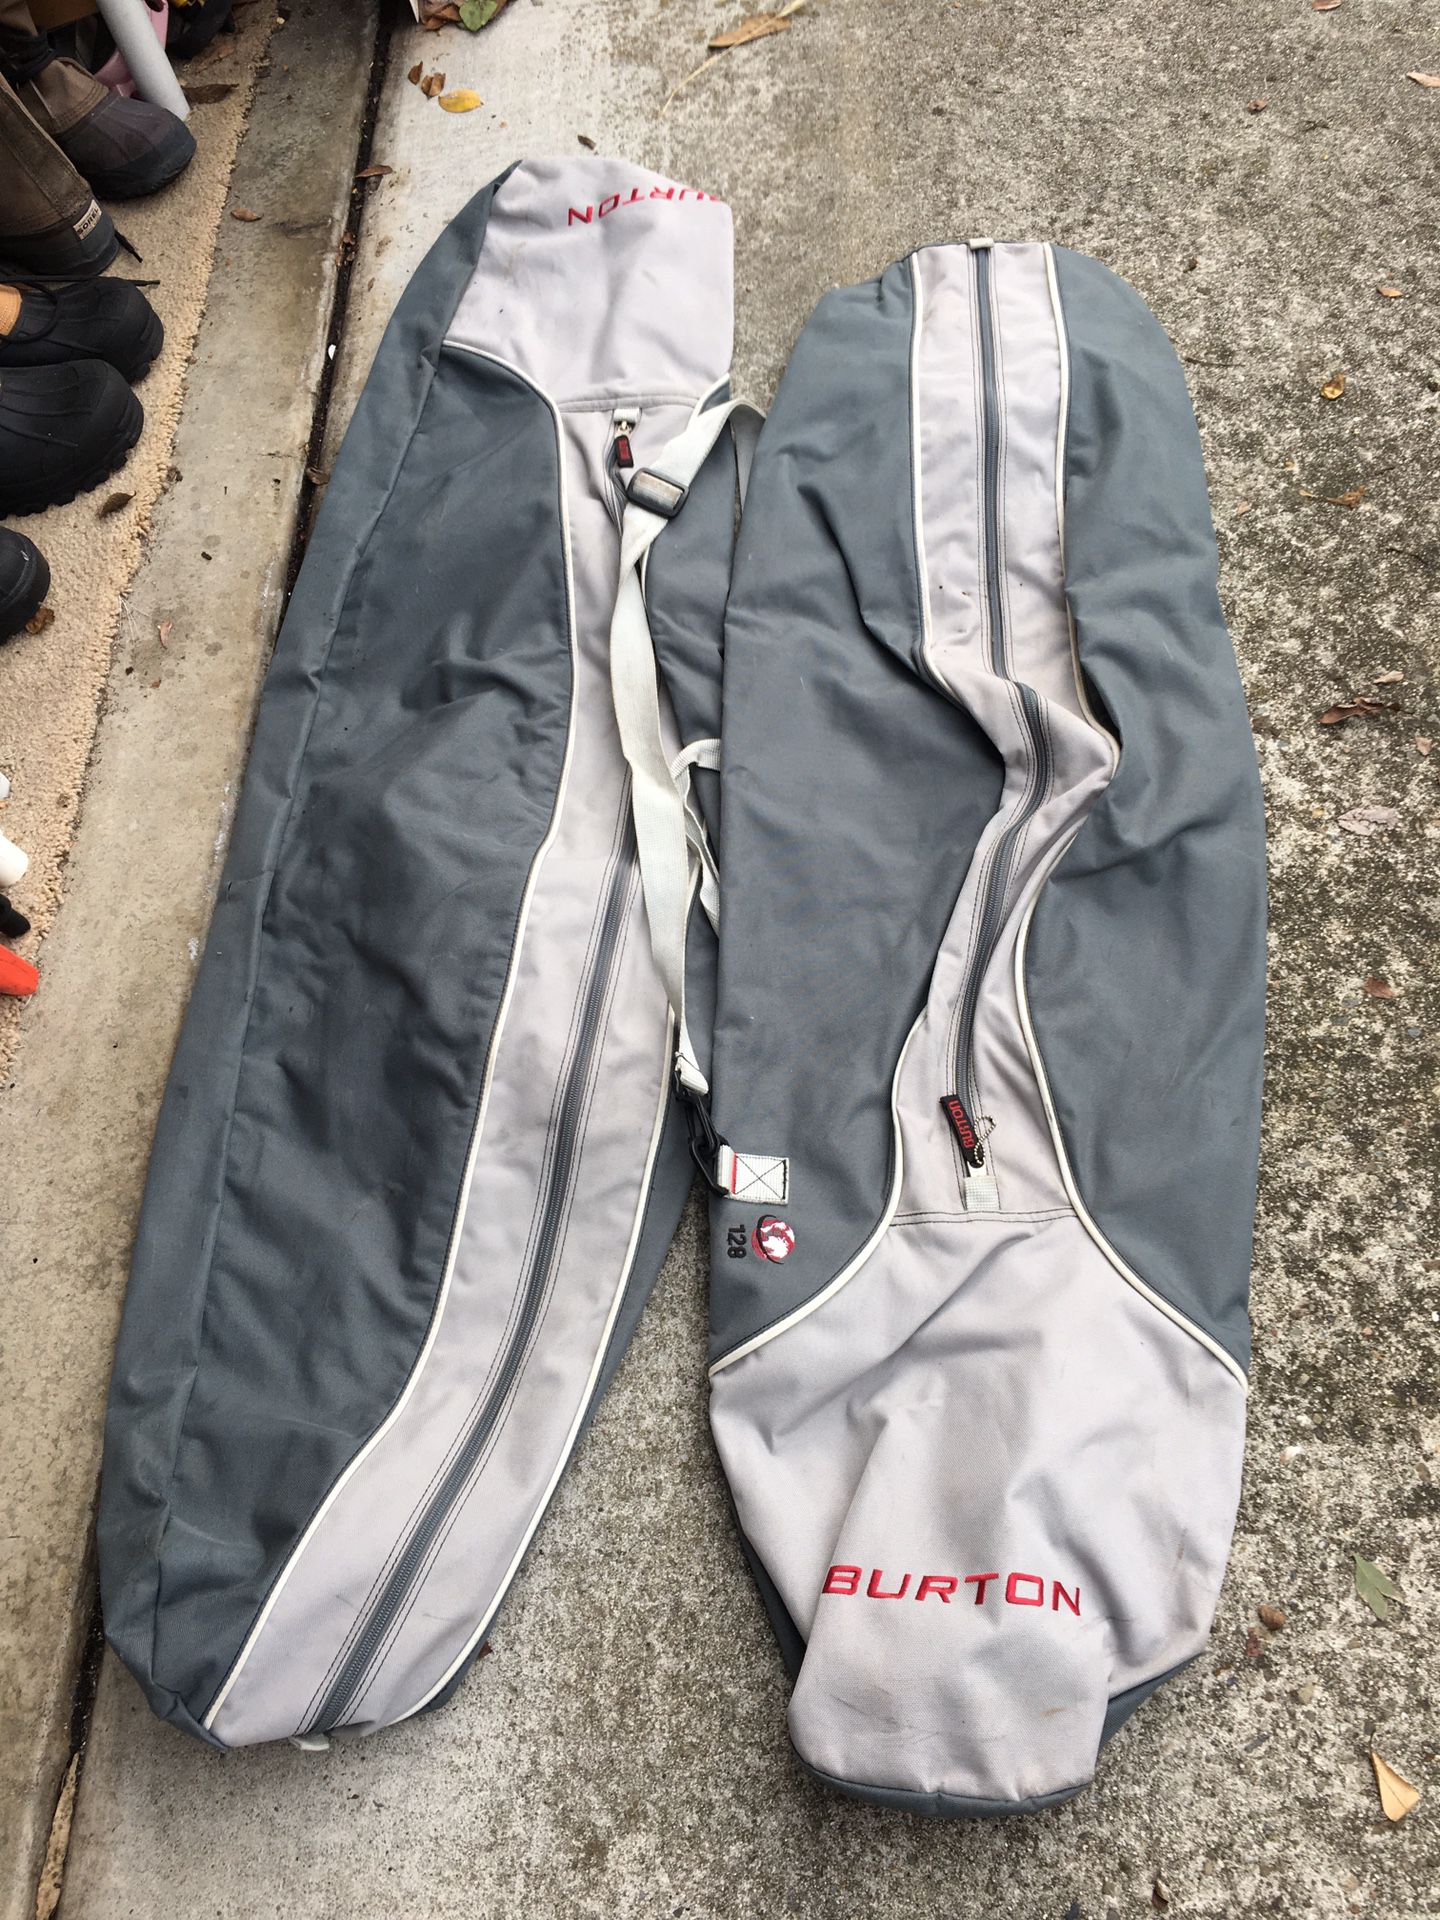 Burton Snowboard Bags